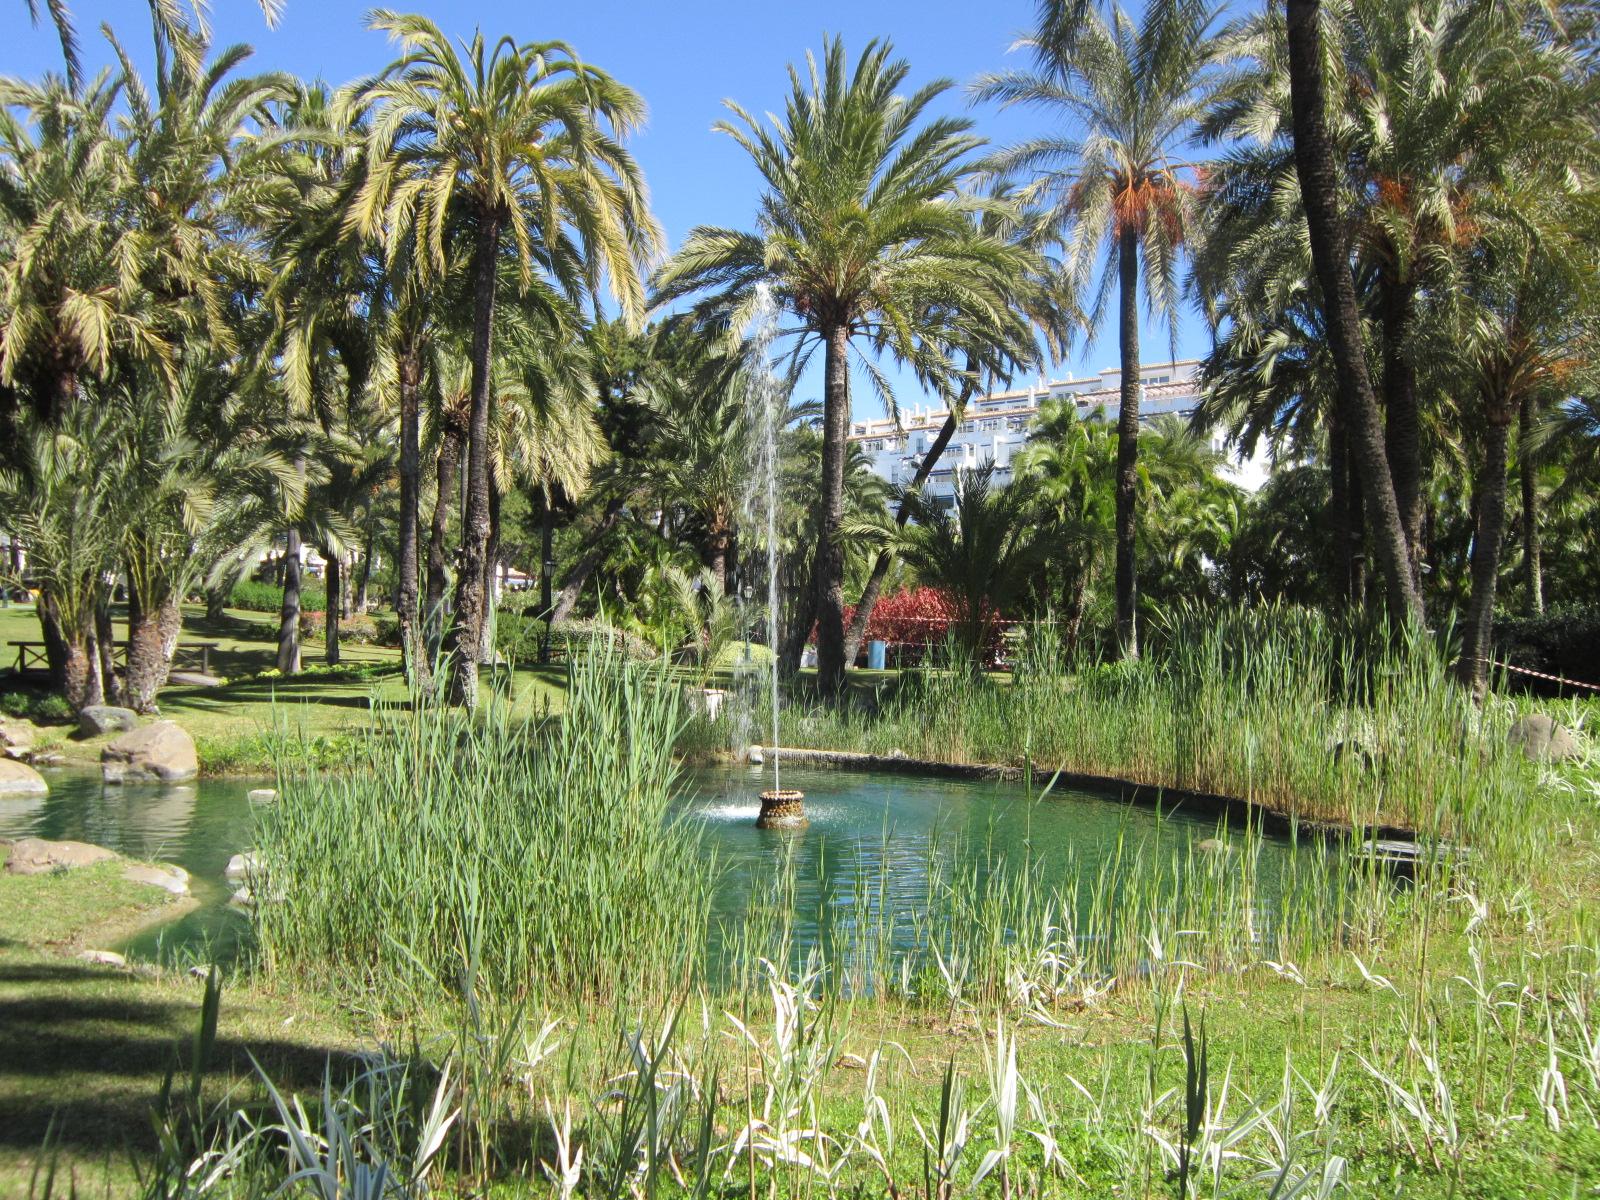 Leilighet ferie til Nueva Andalucía (Marbella)